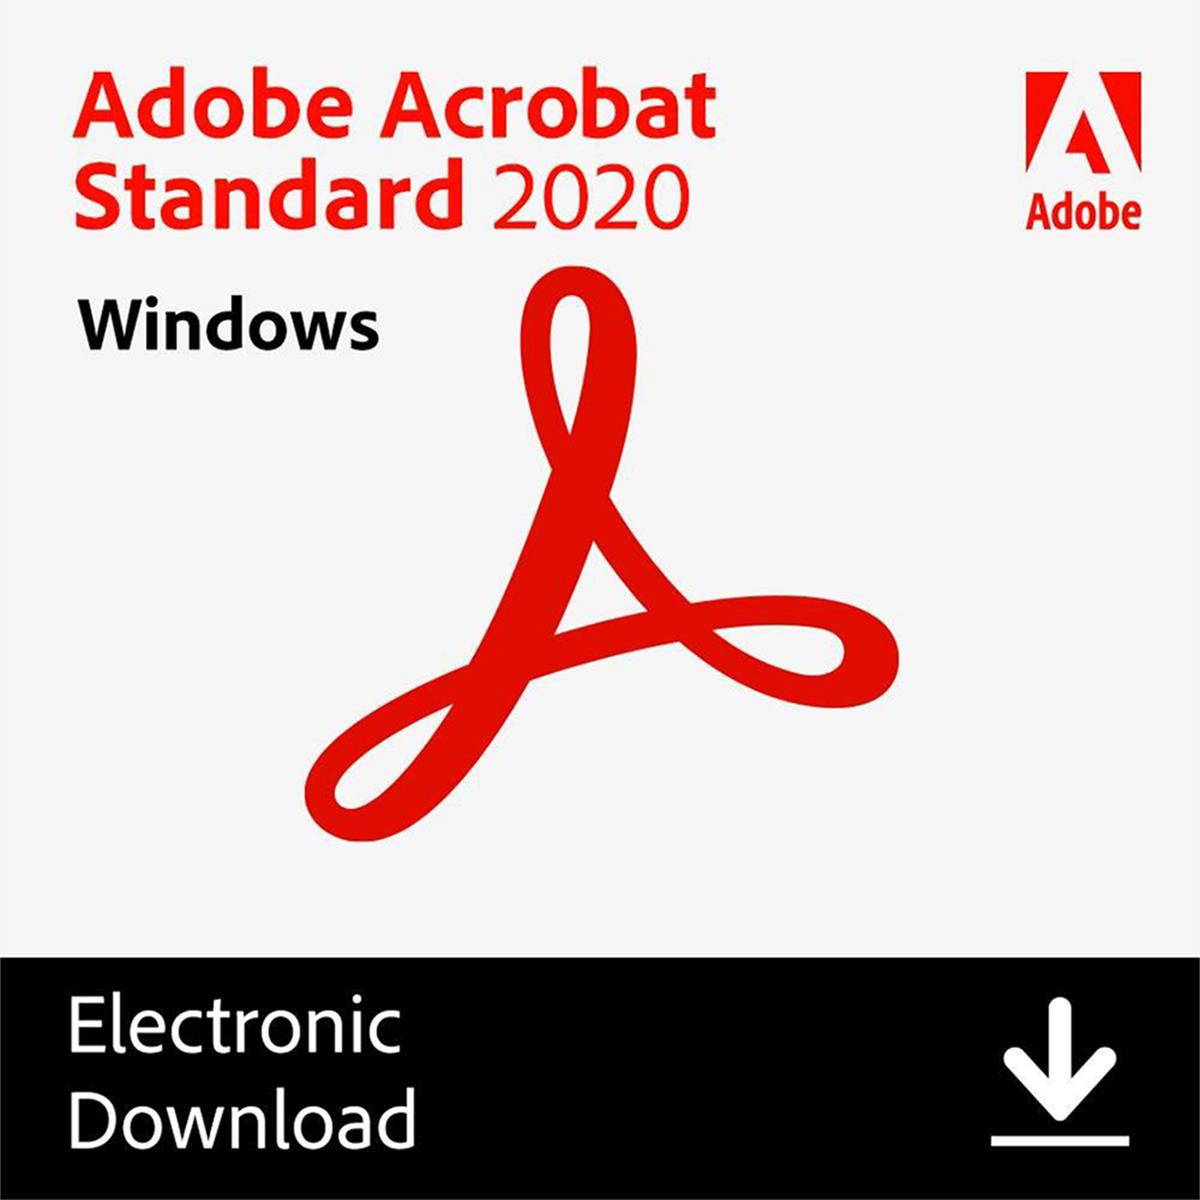 Image of Adobe Acrobat Standard 2020 Perpetual License for Windows